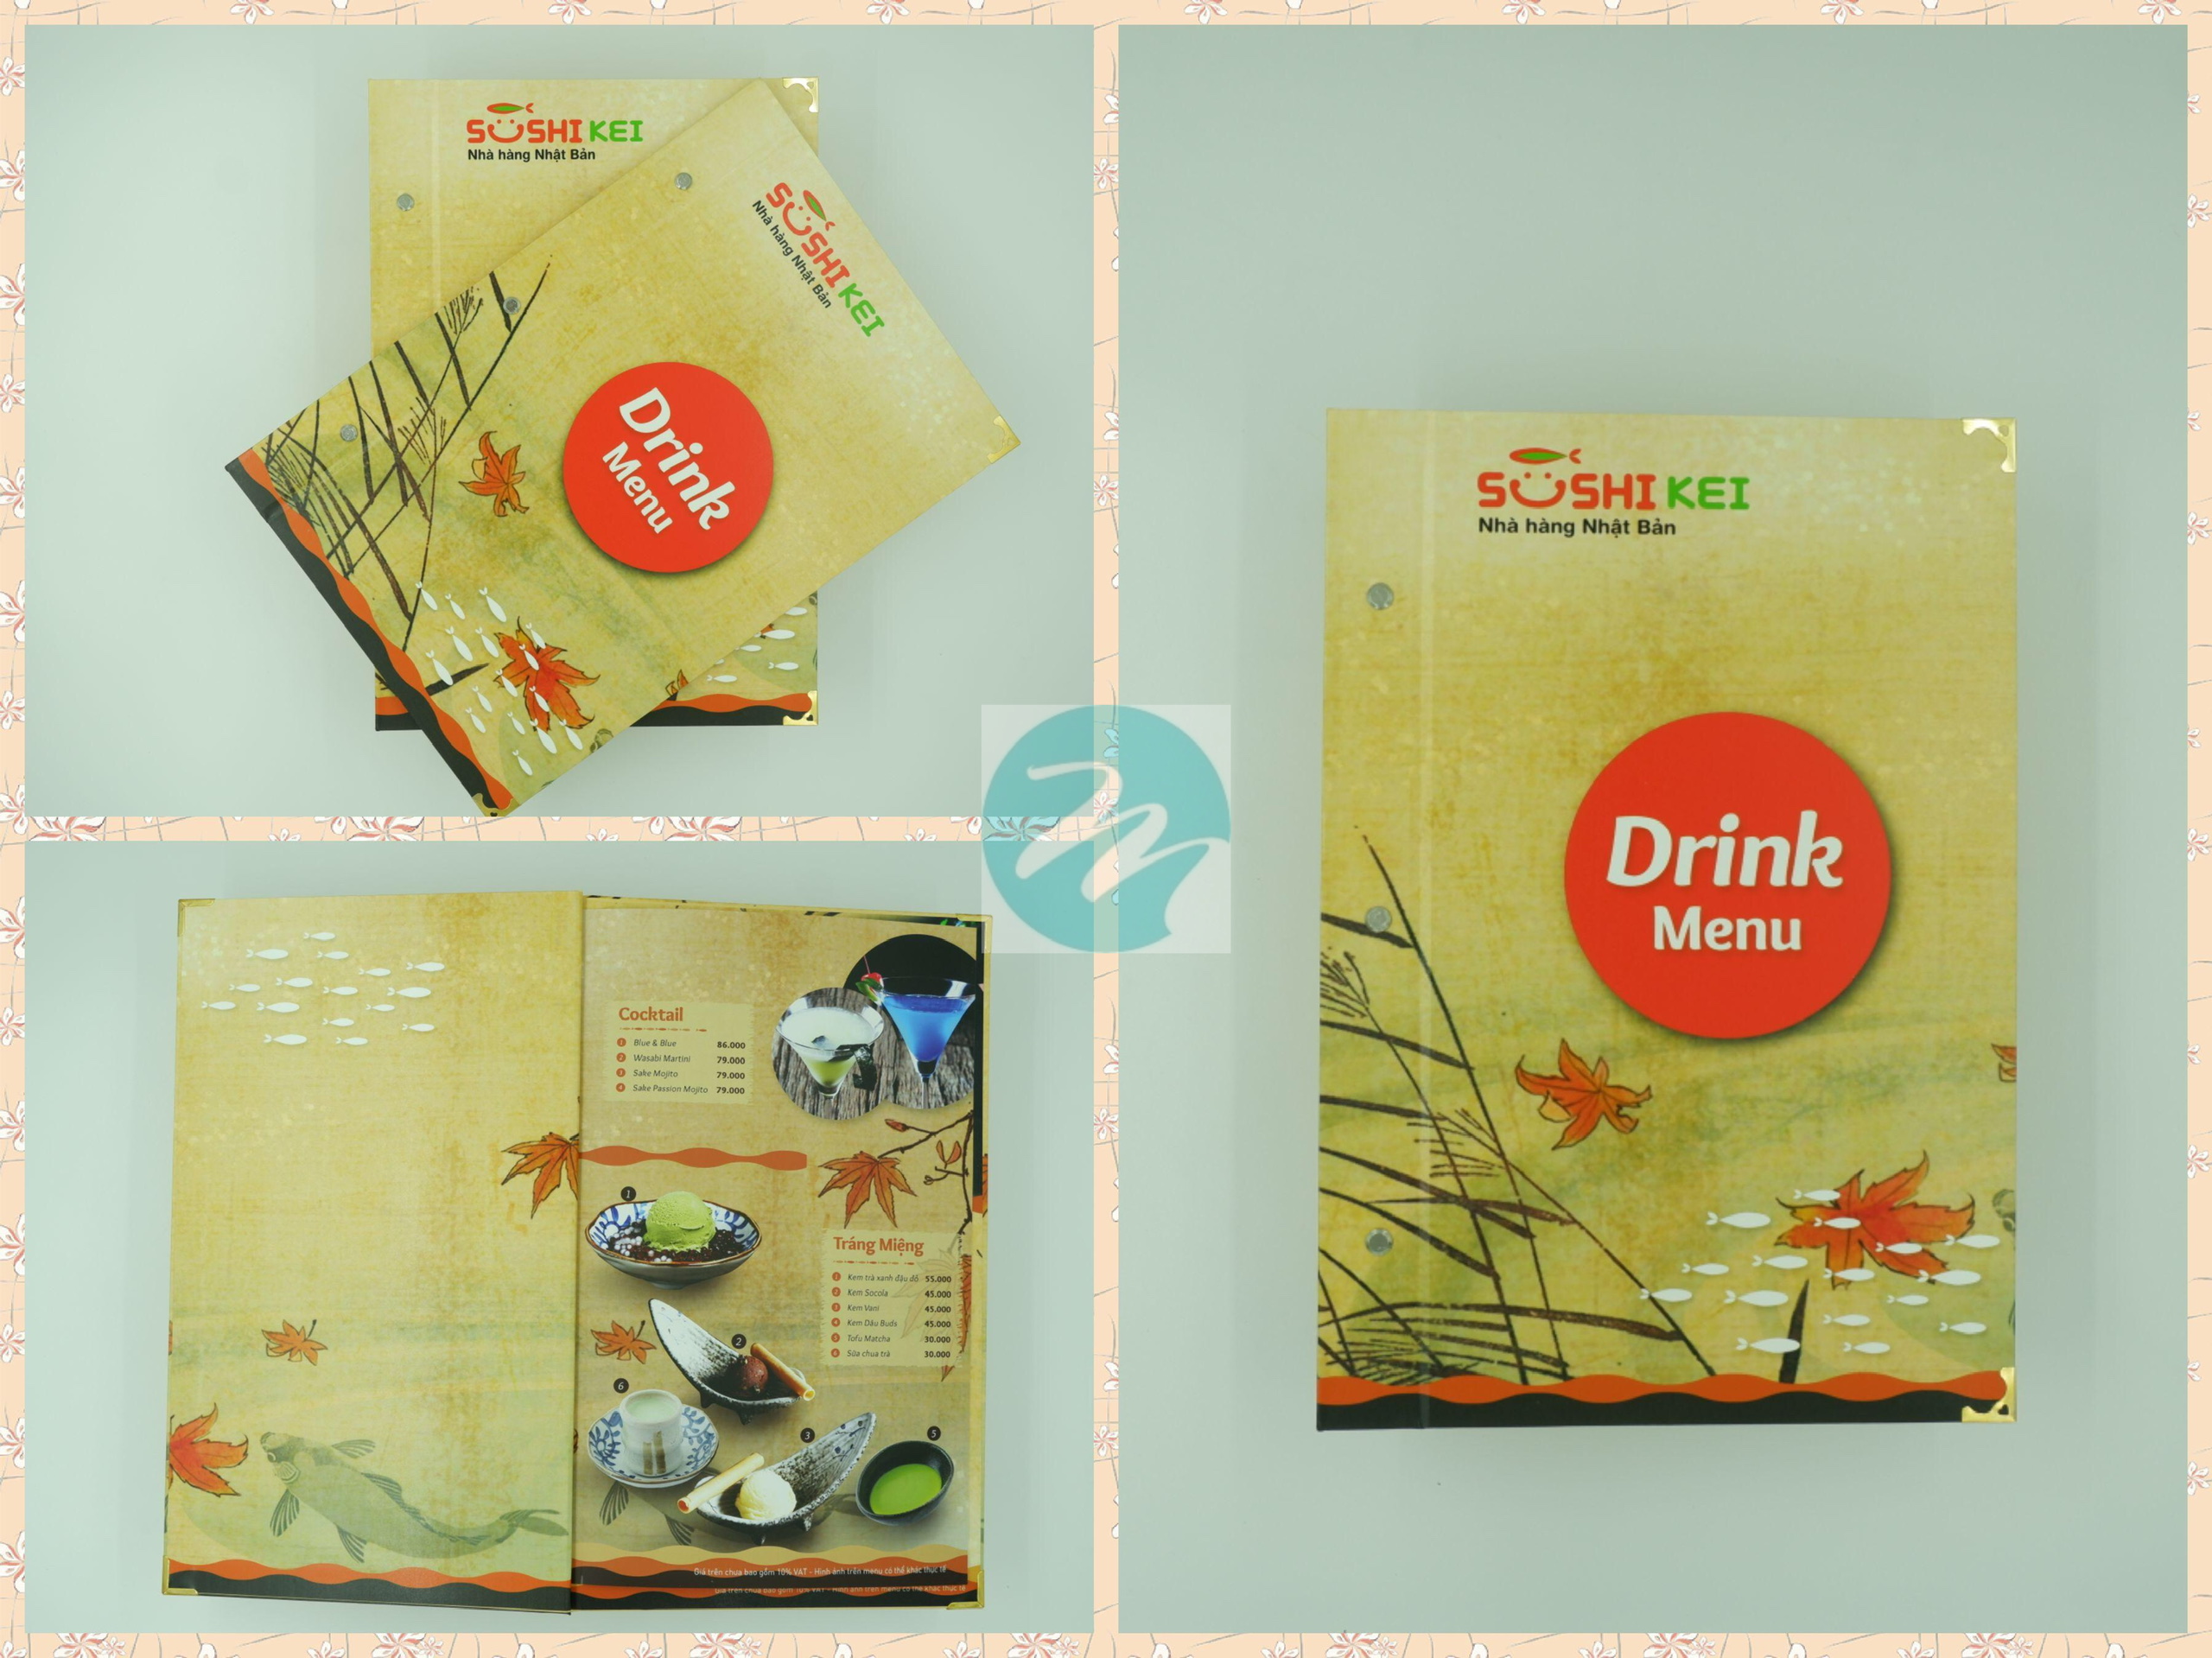 Drink menu bìa cứng Sushikei